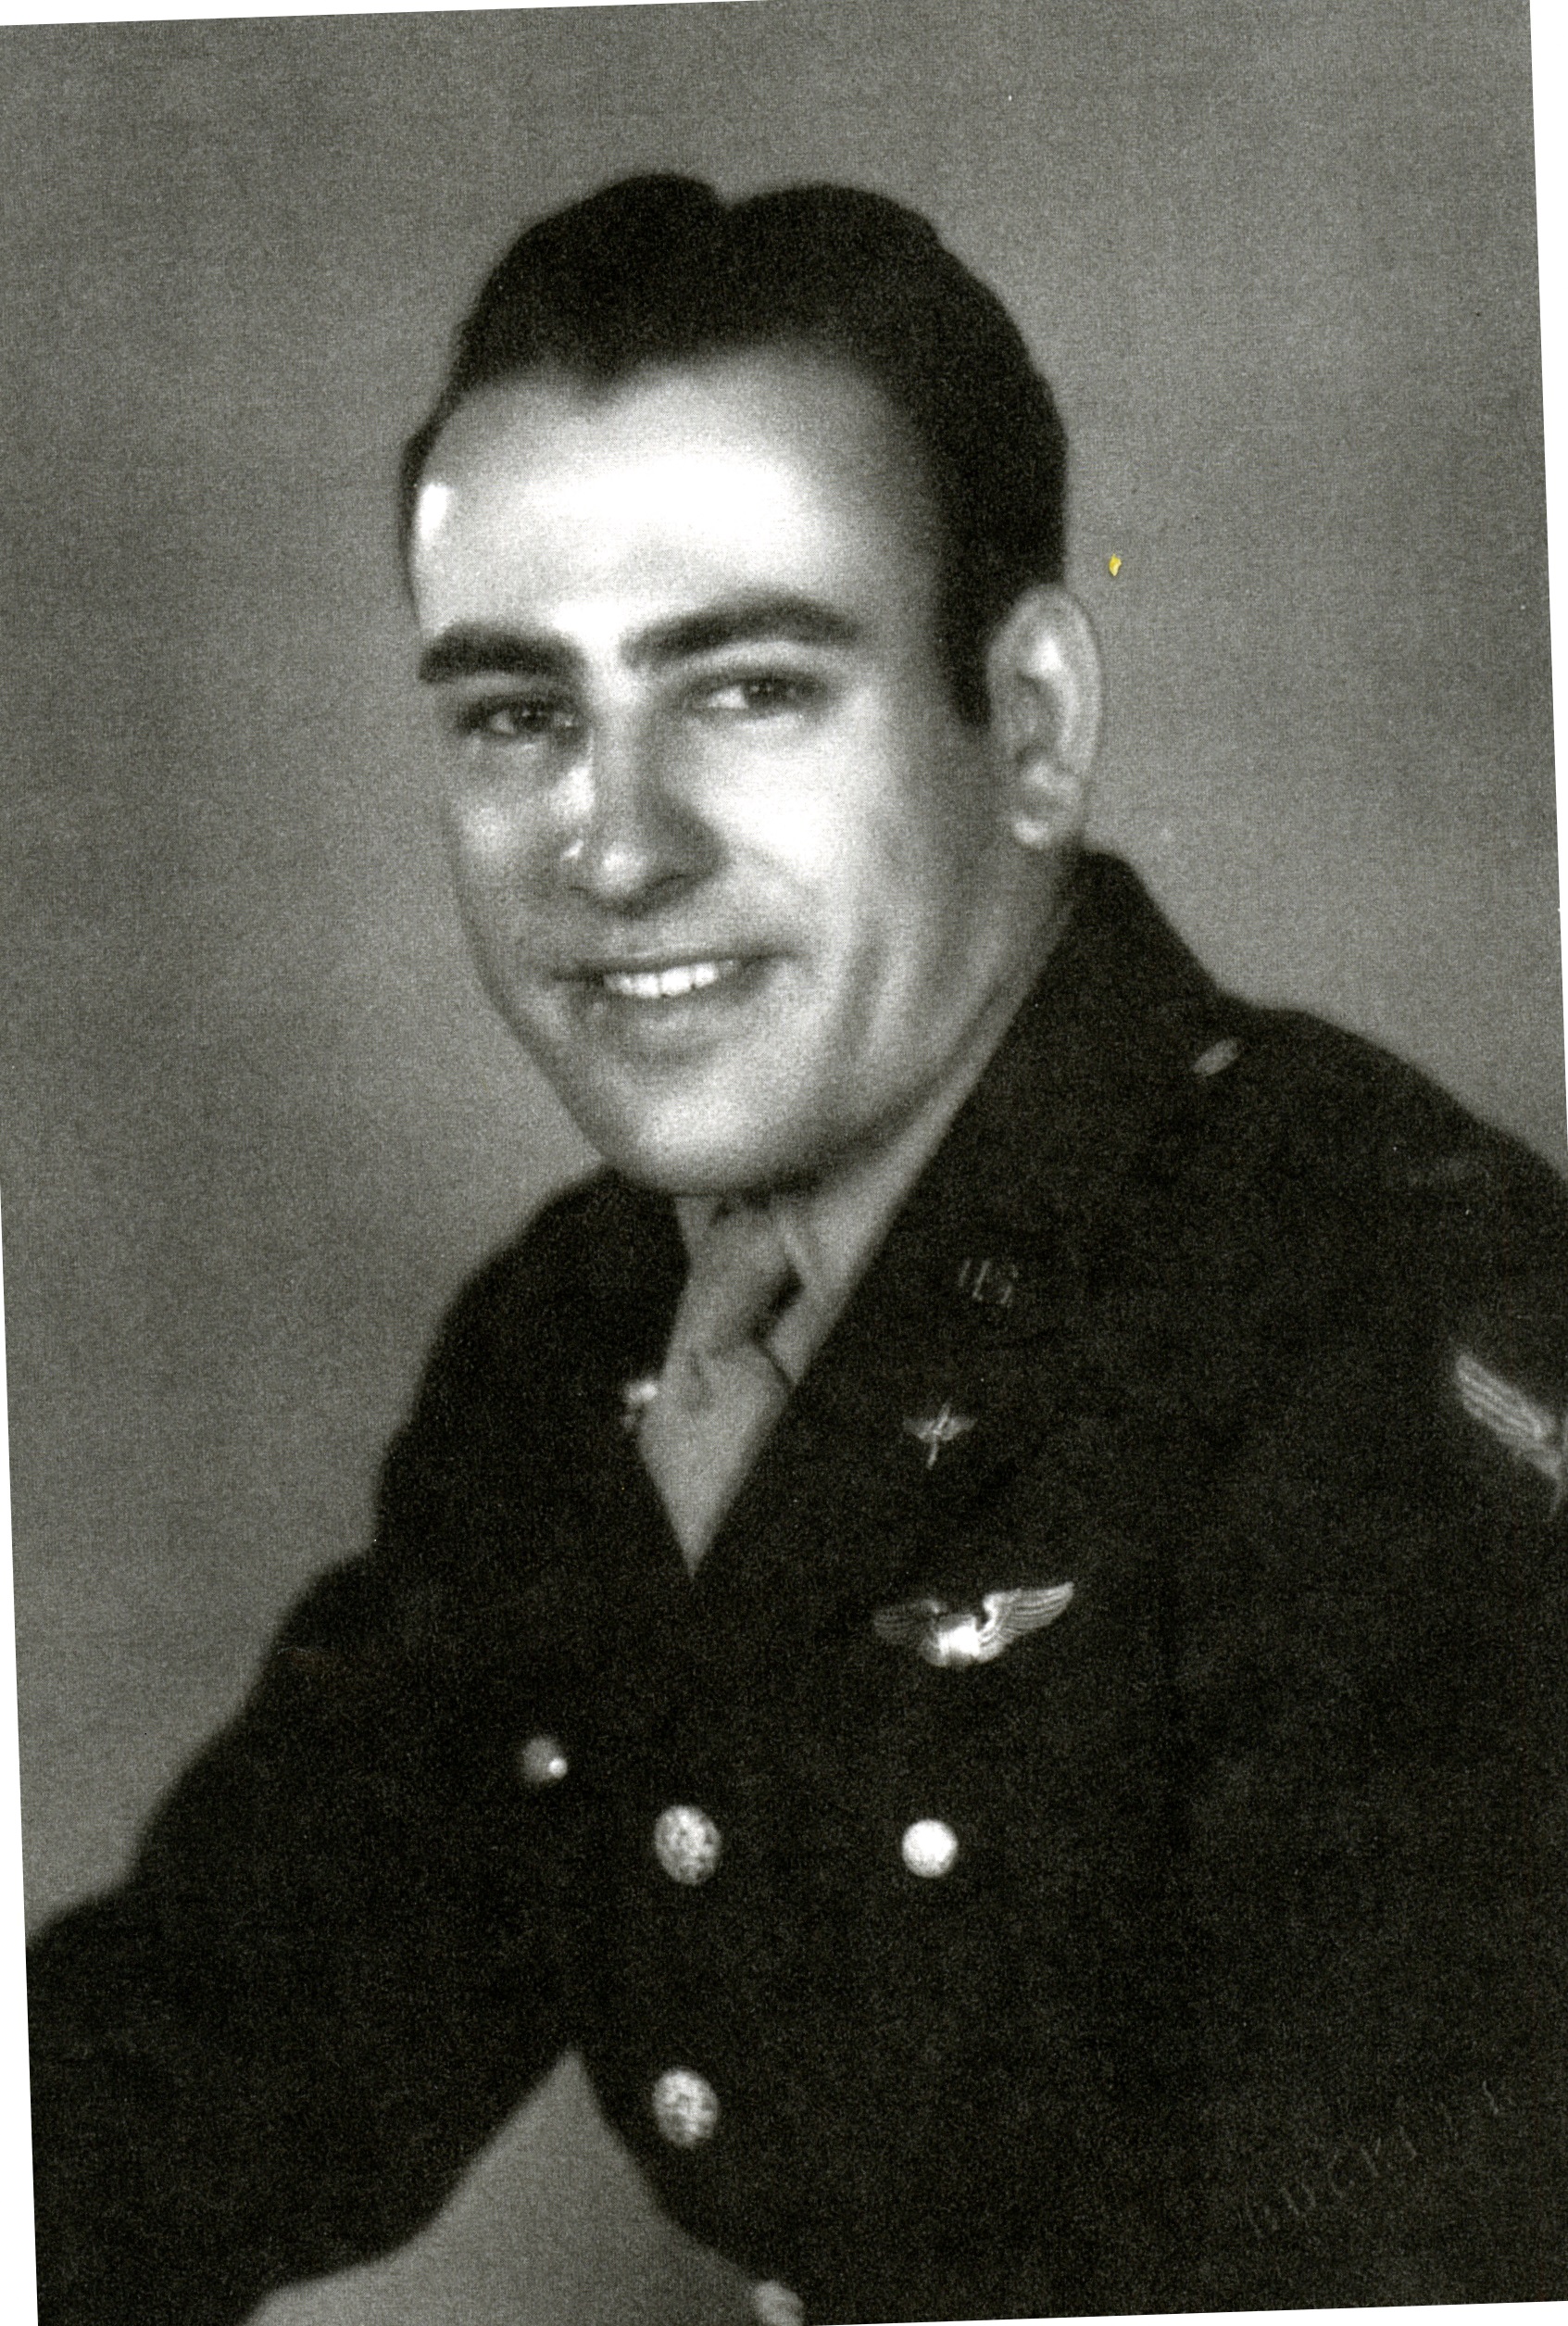 Capt James W. Wright